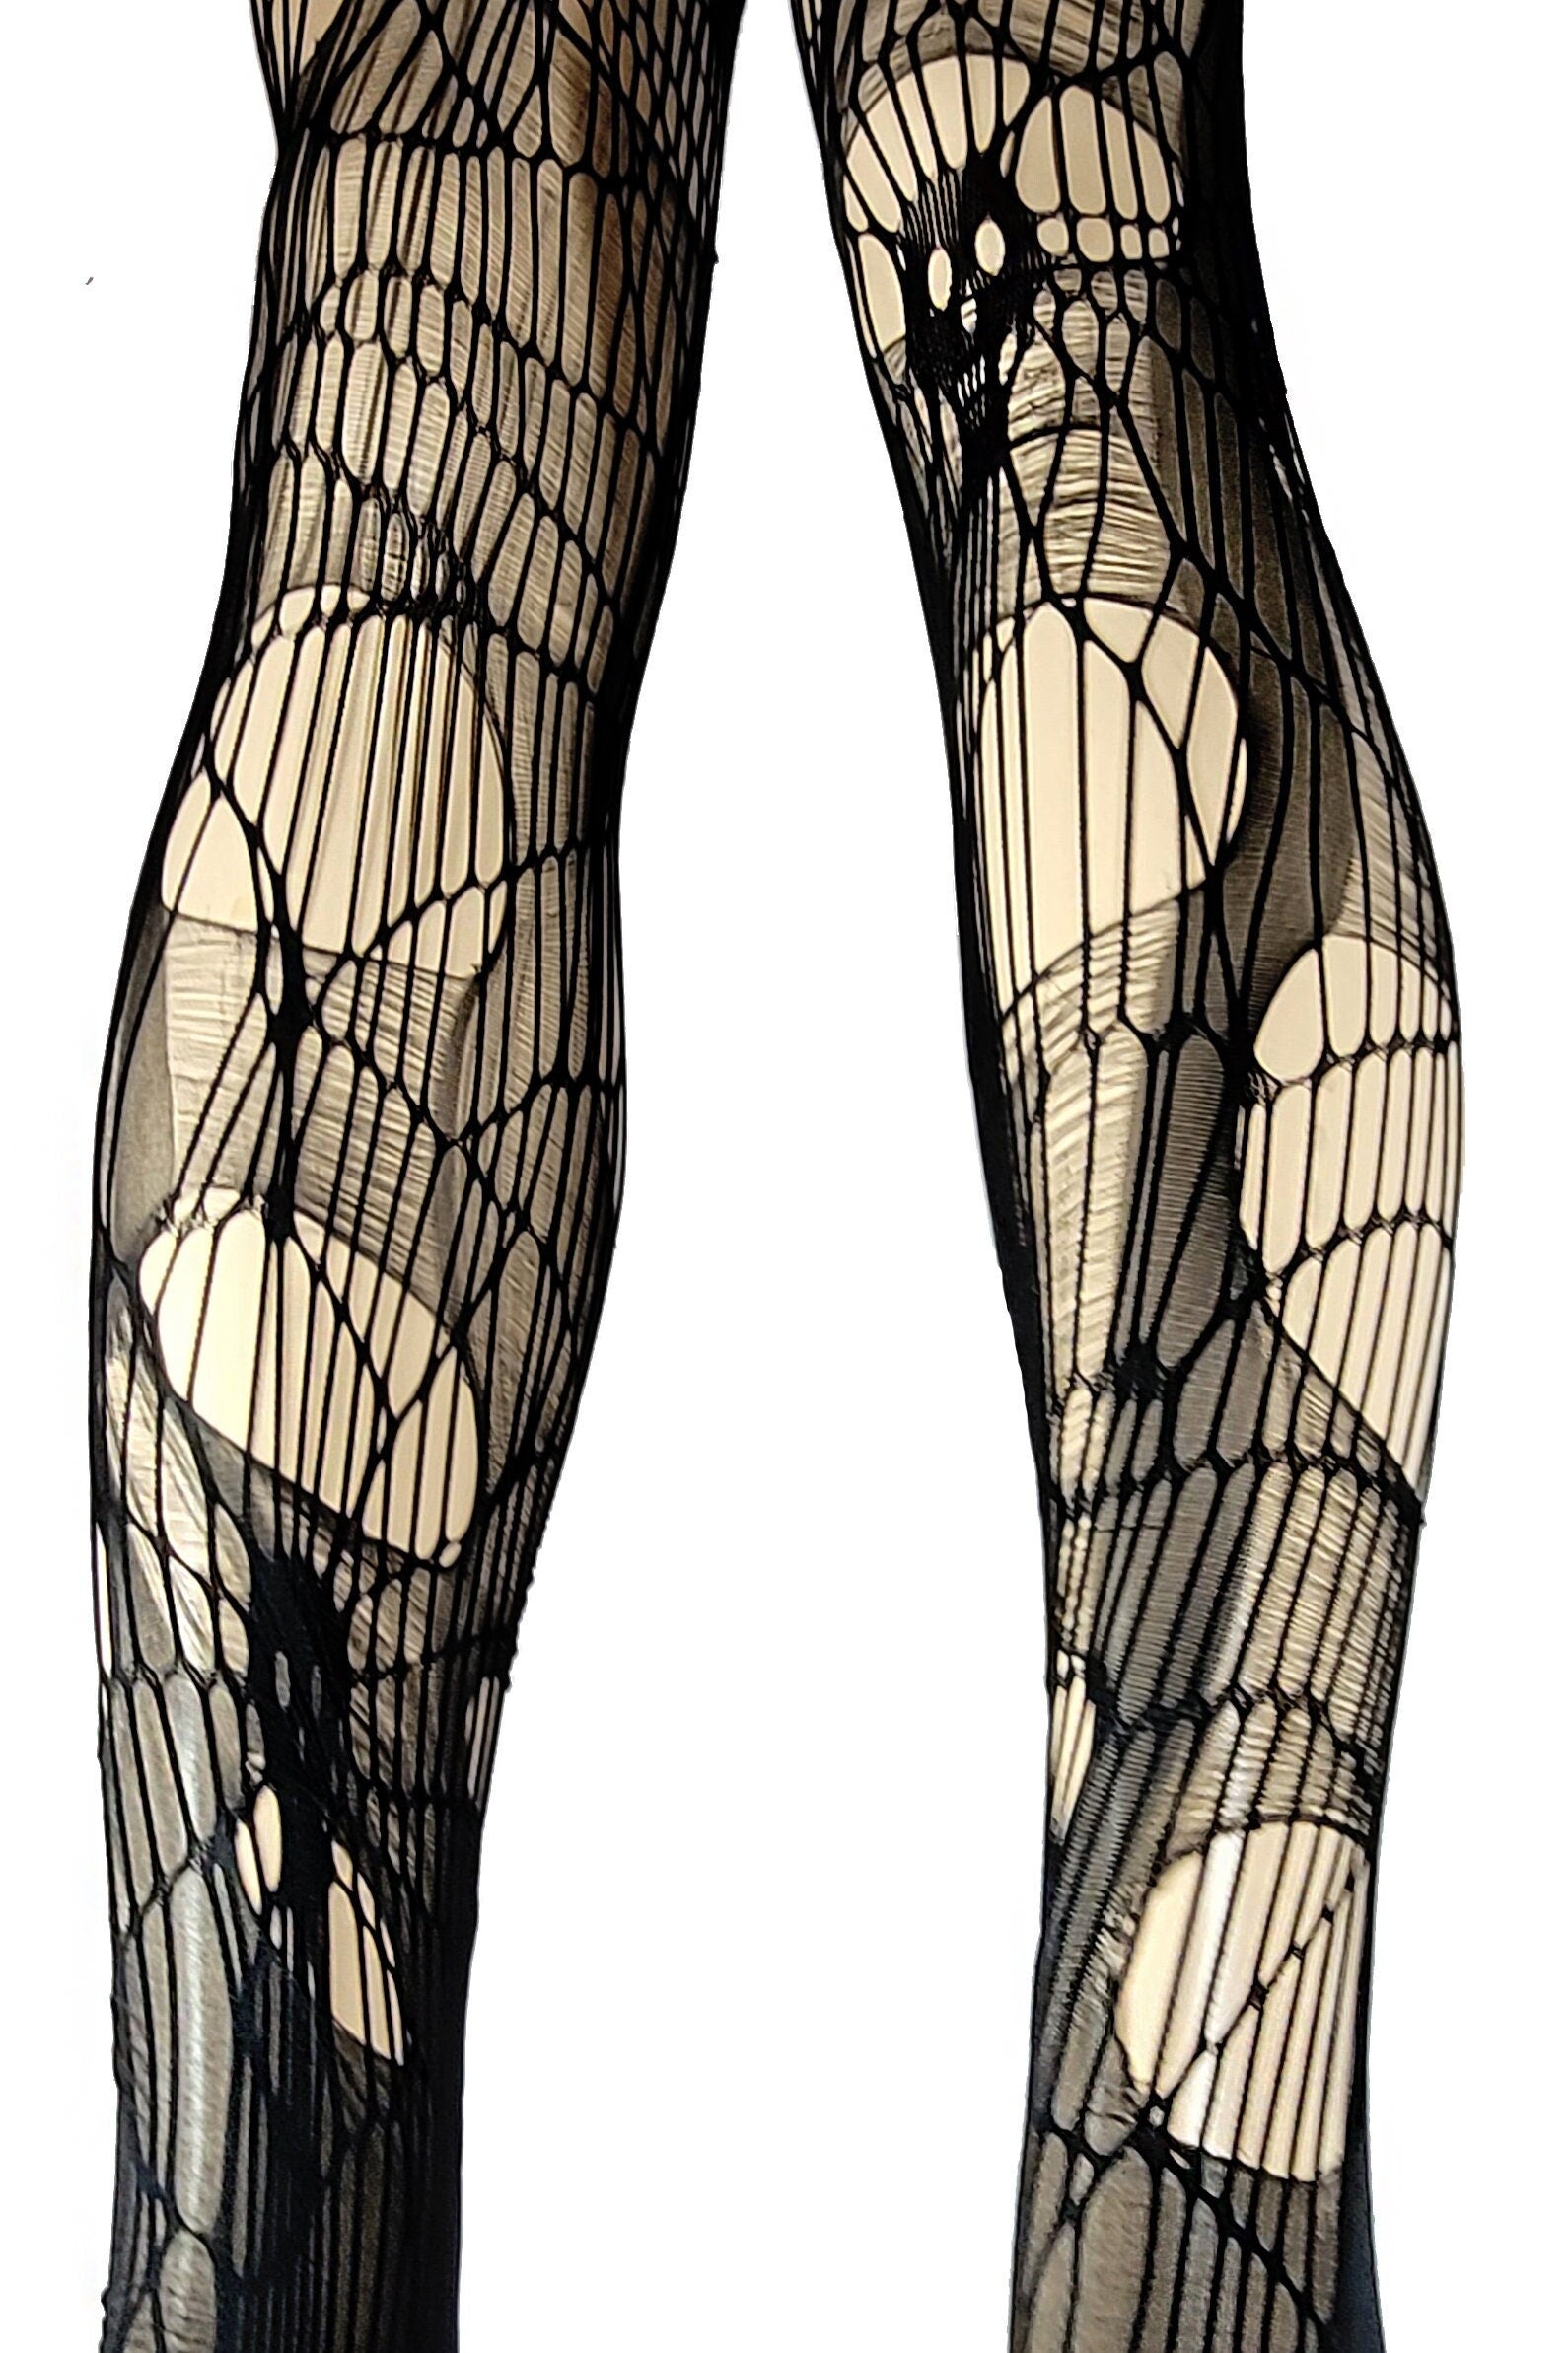 Tattered & torn fishnet tights